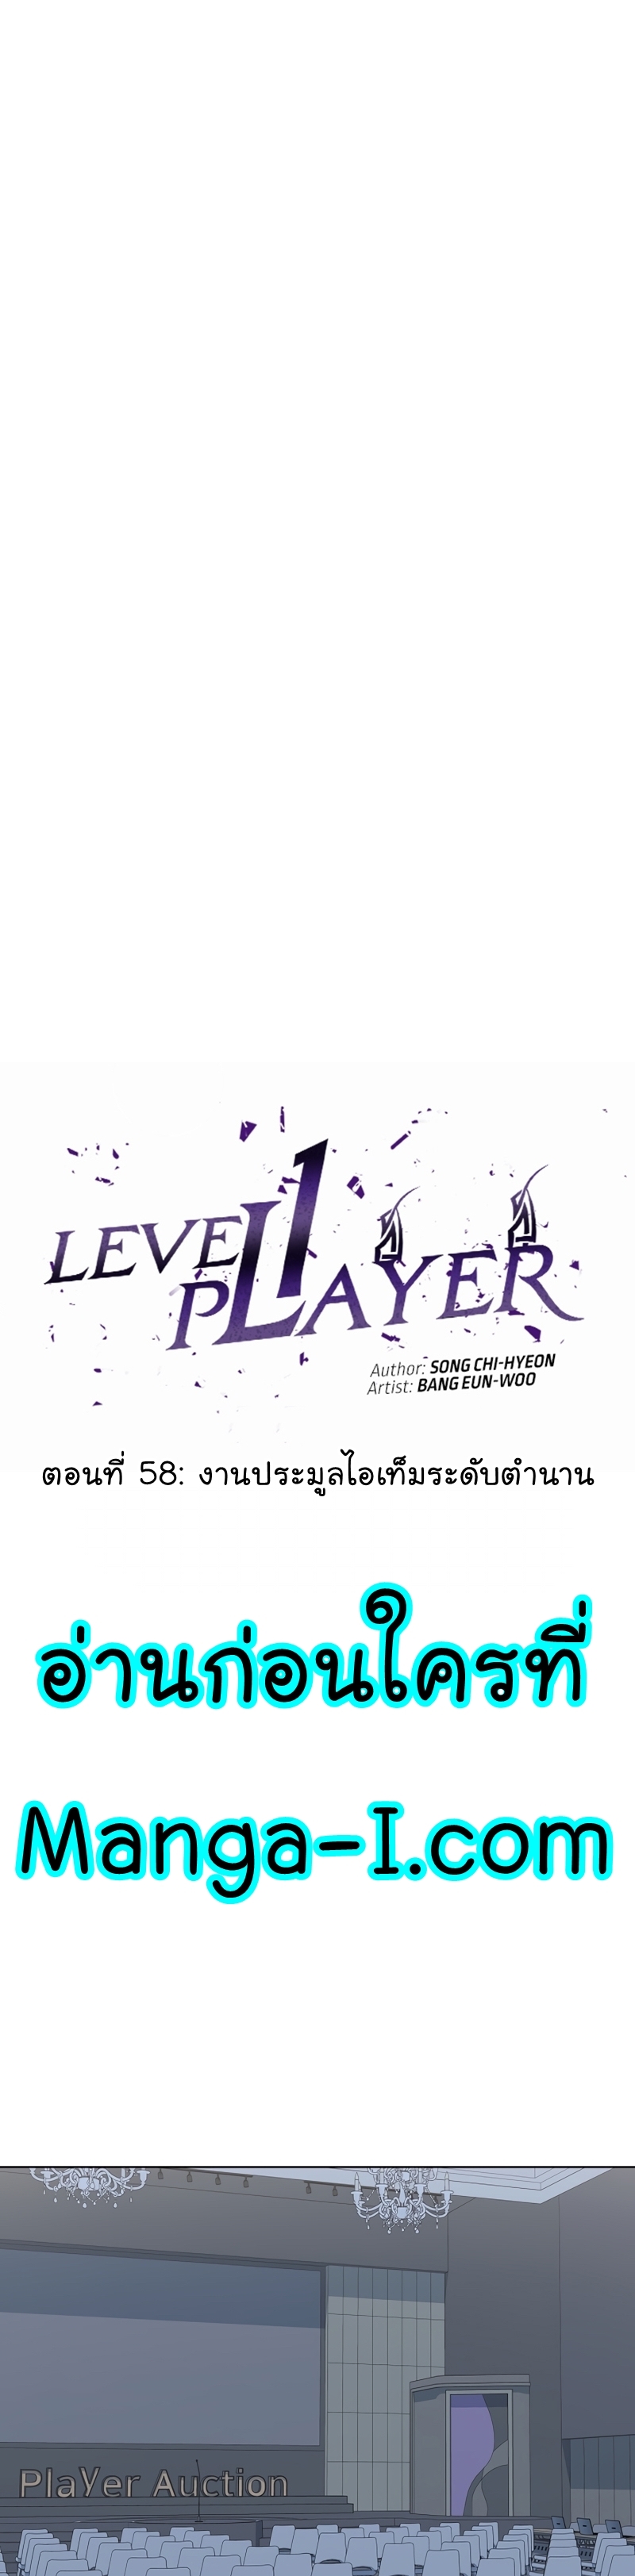 level 1 player 58 09